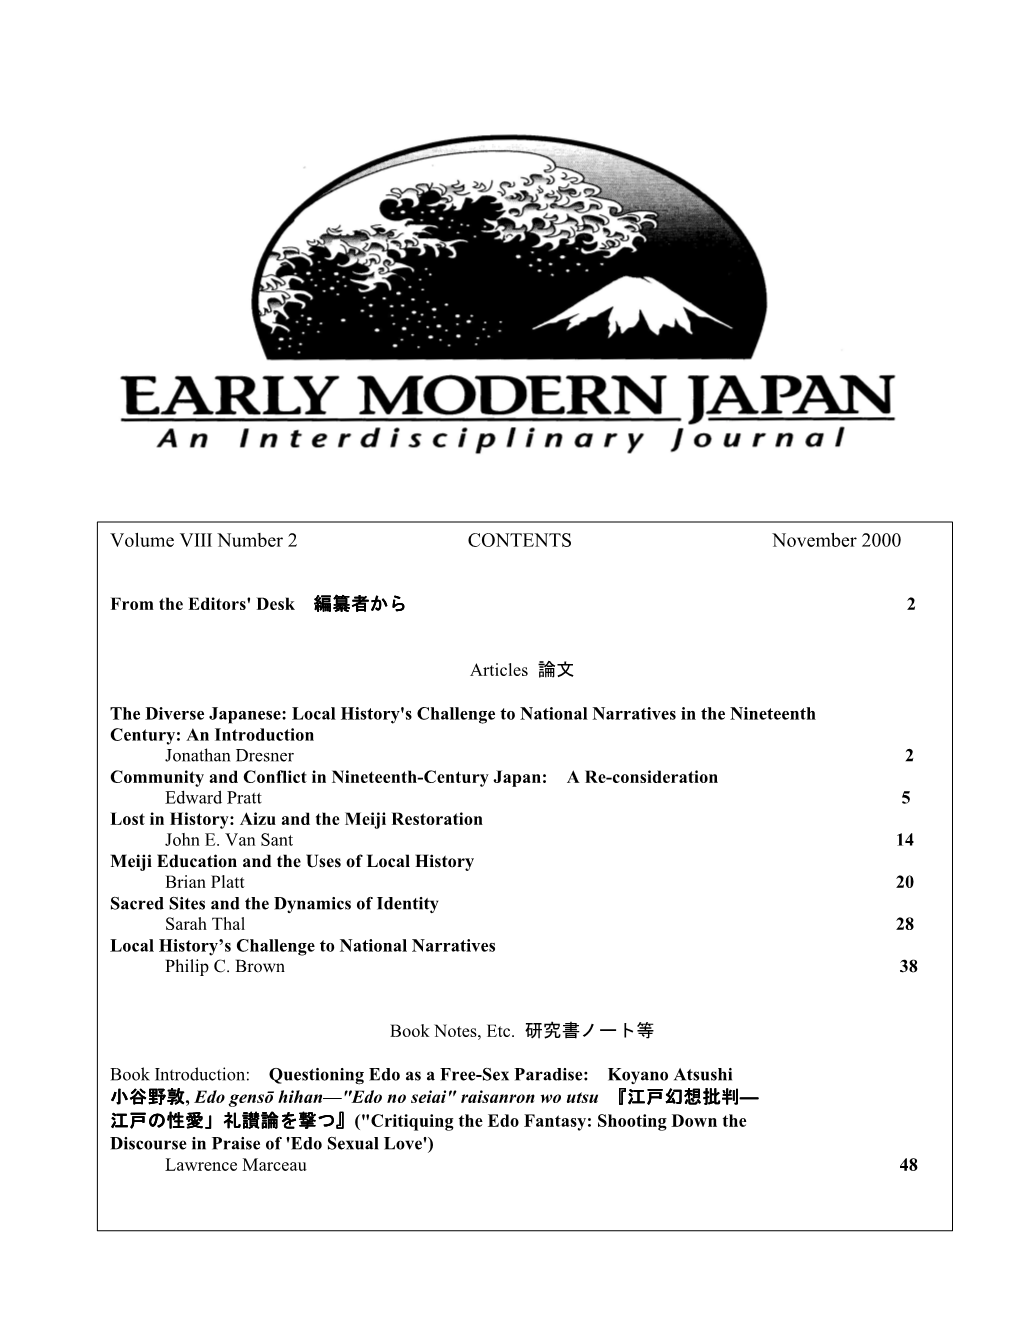 November 1999 EARLY MODERN JAPAN 1